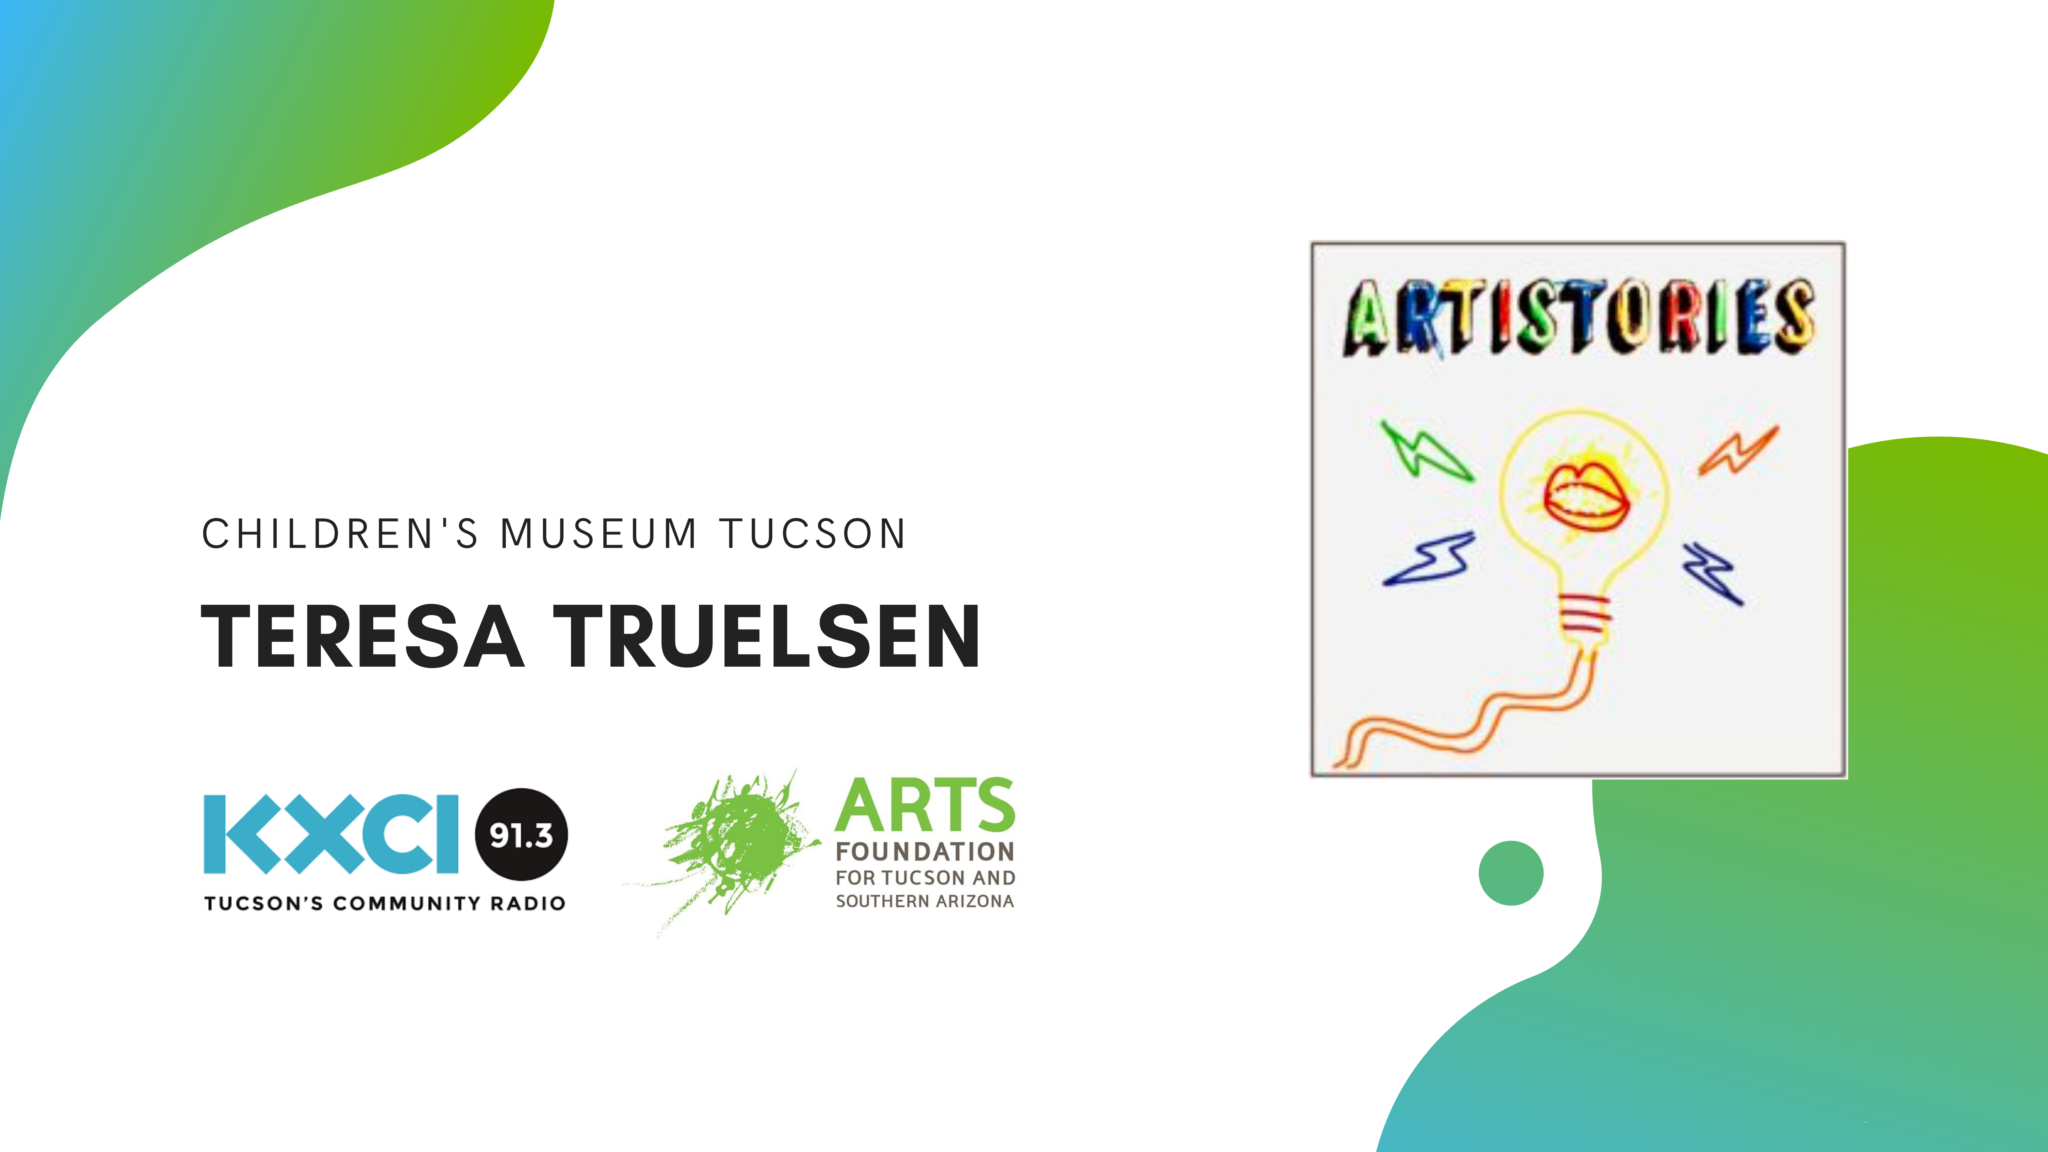 ARTISTORIES: Teresa Truelsen